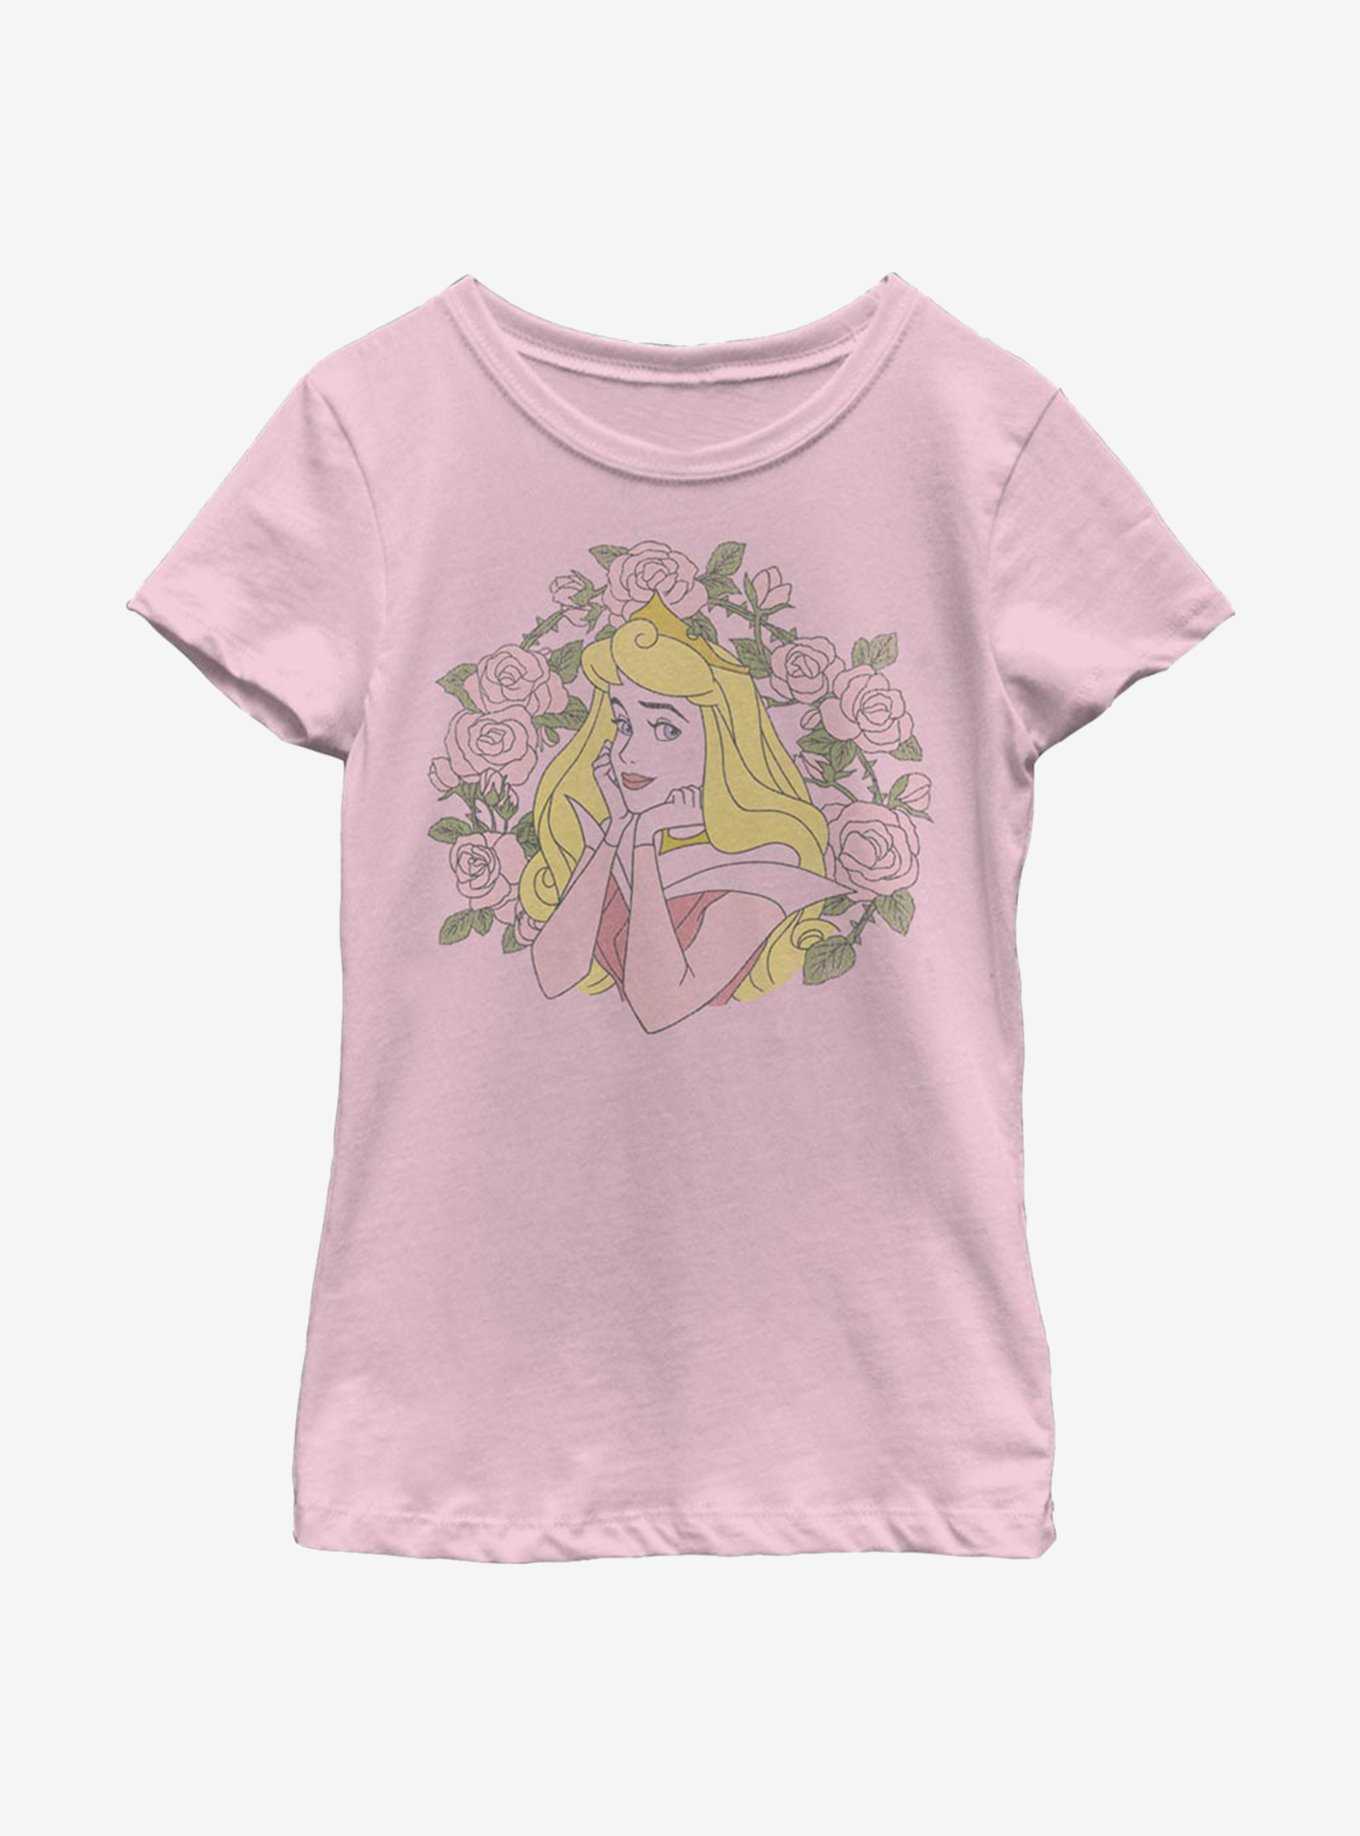 Disney Sleeping Beauty Briar Rose Thorns Youth Girls T-Shirt, , hi-res